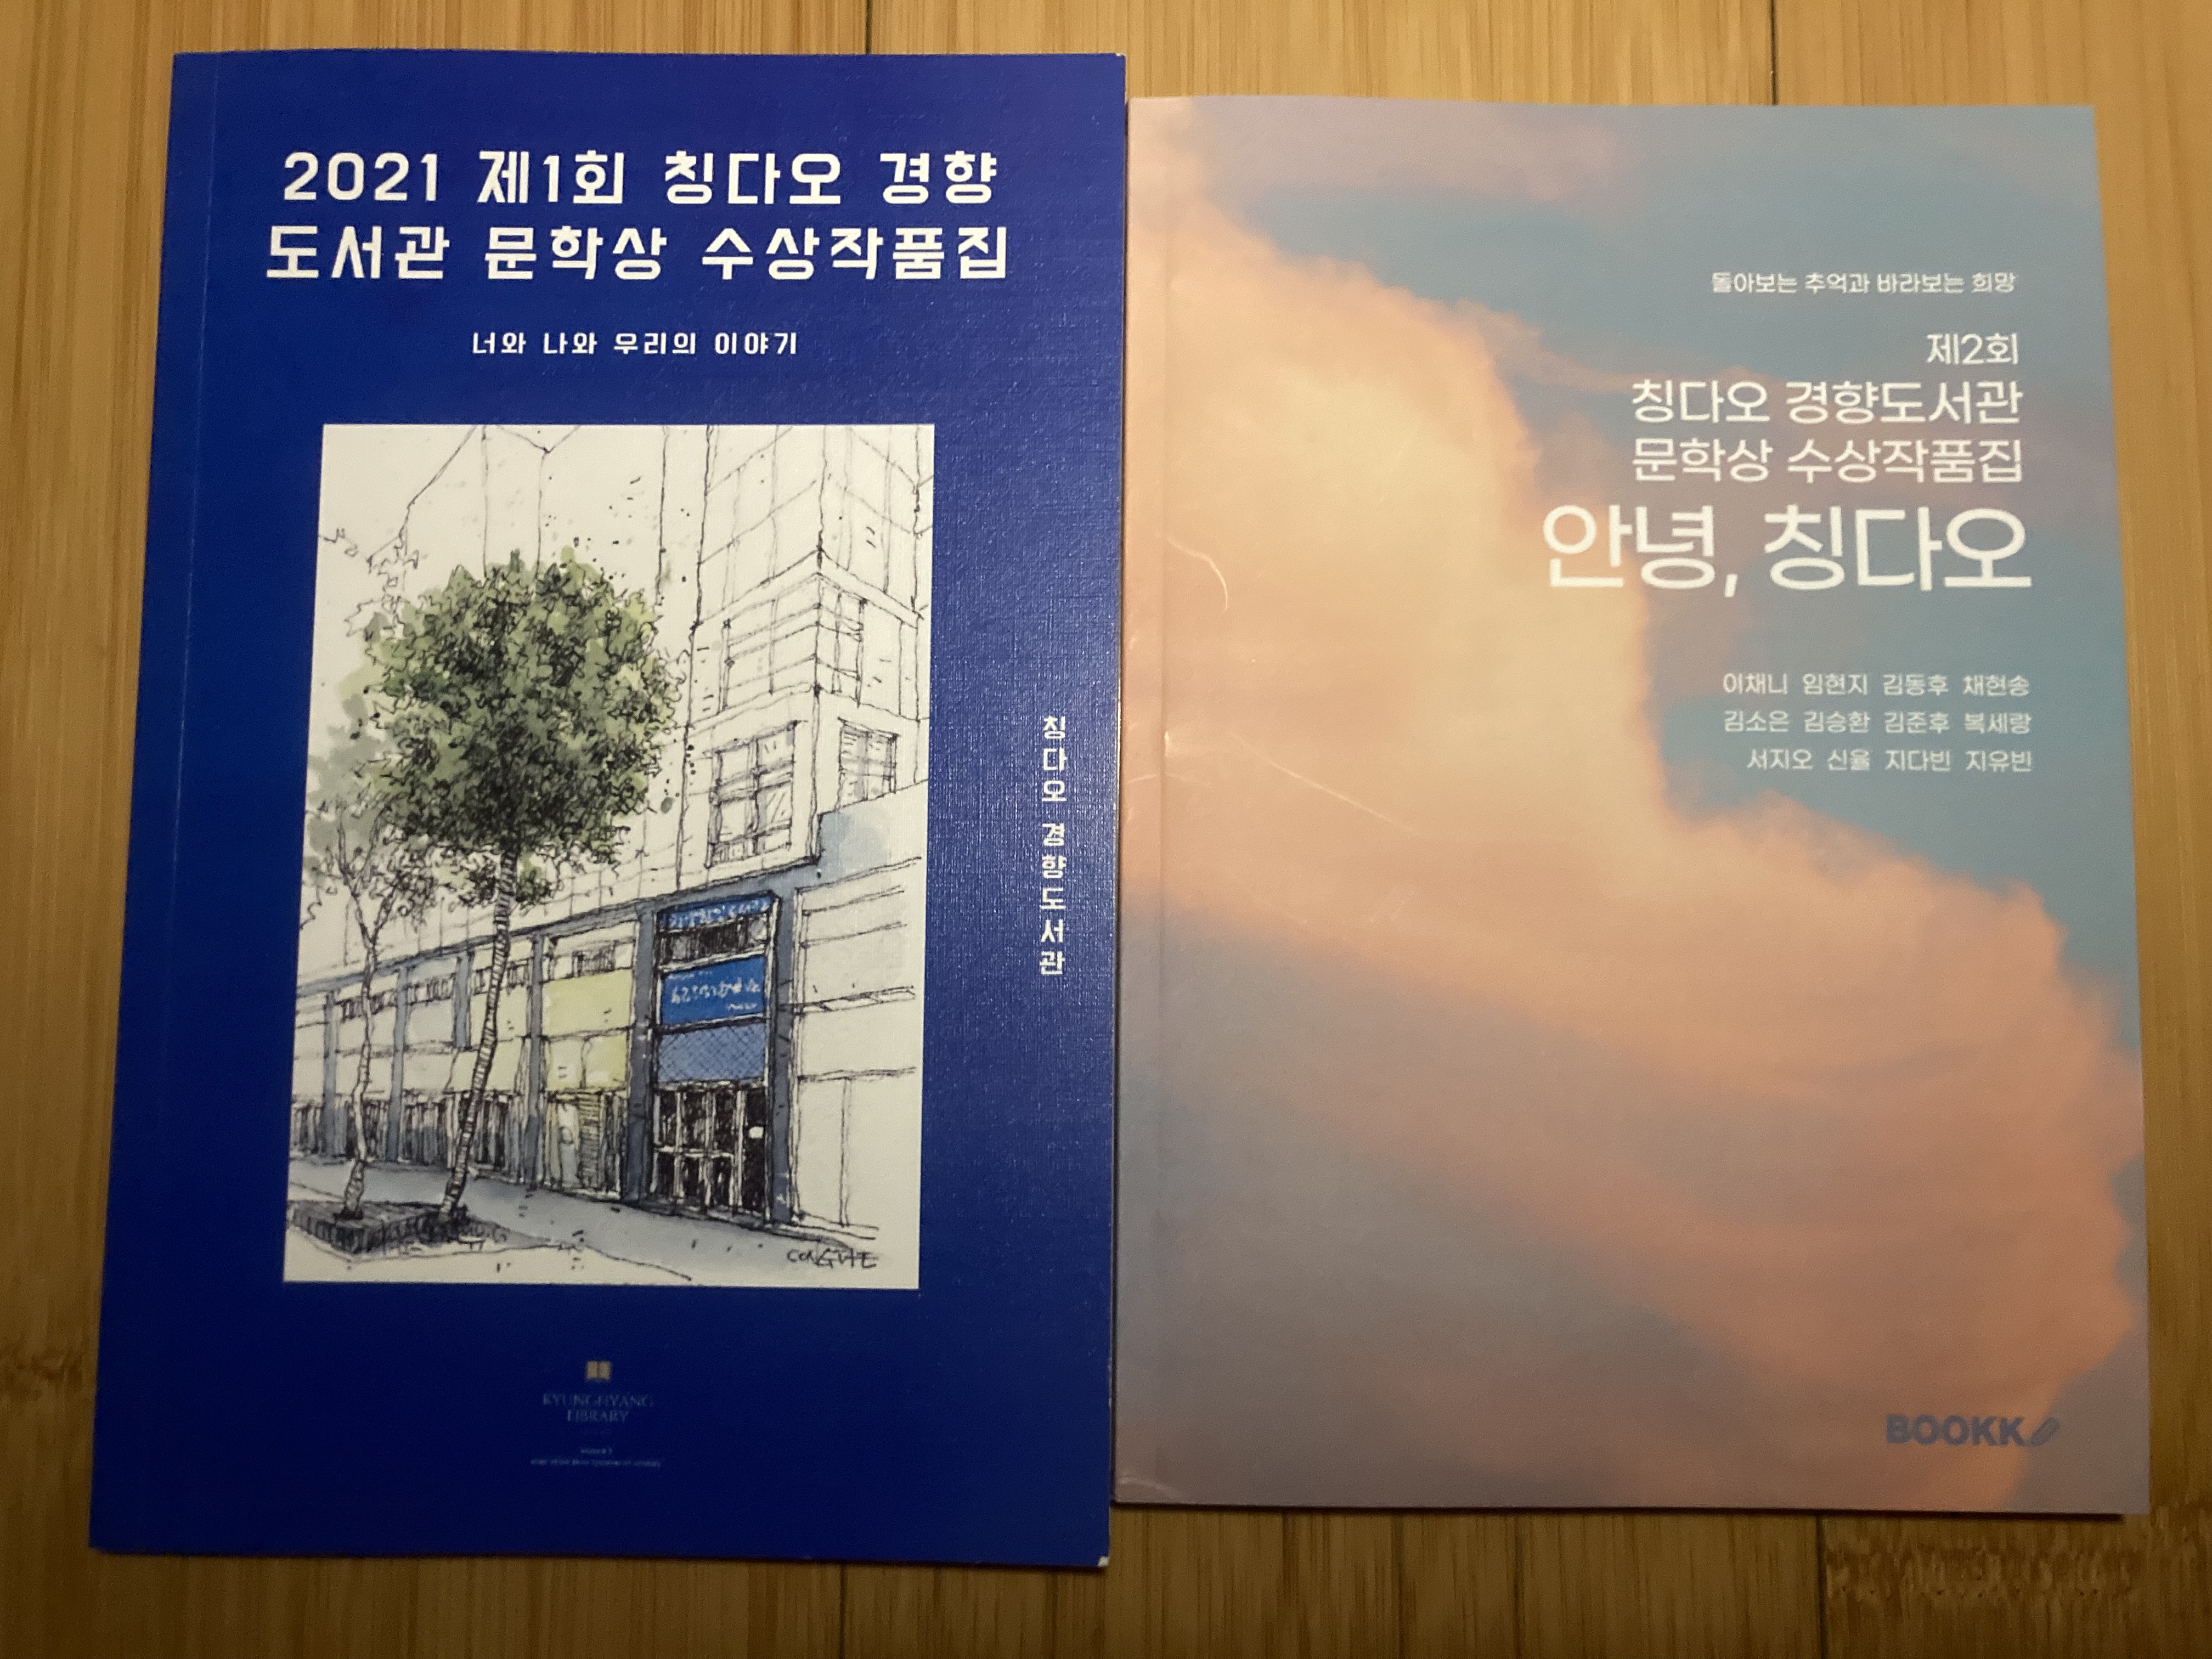 Gyeonghyang Library Literature Award Winning Works of 2021 and 2022